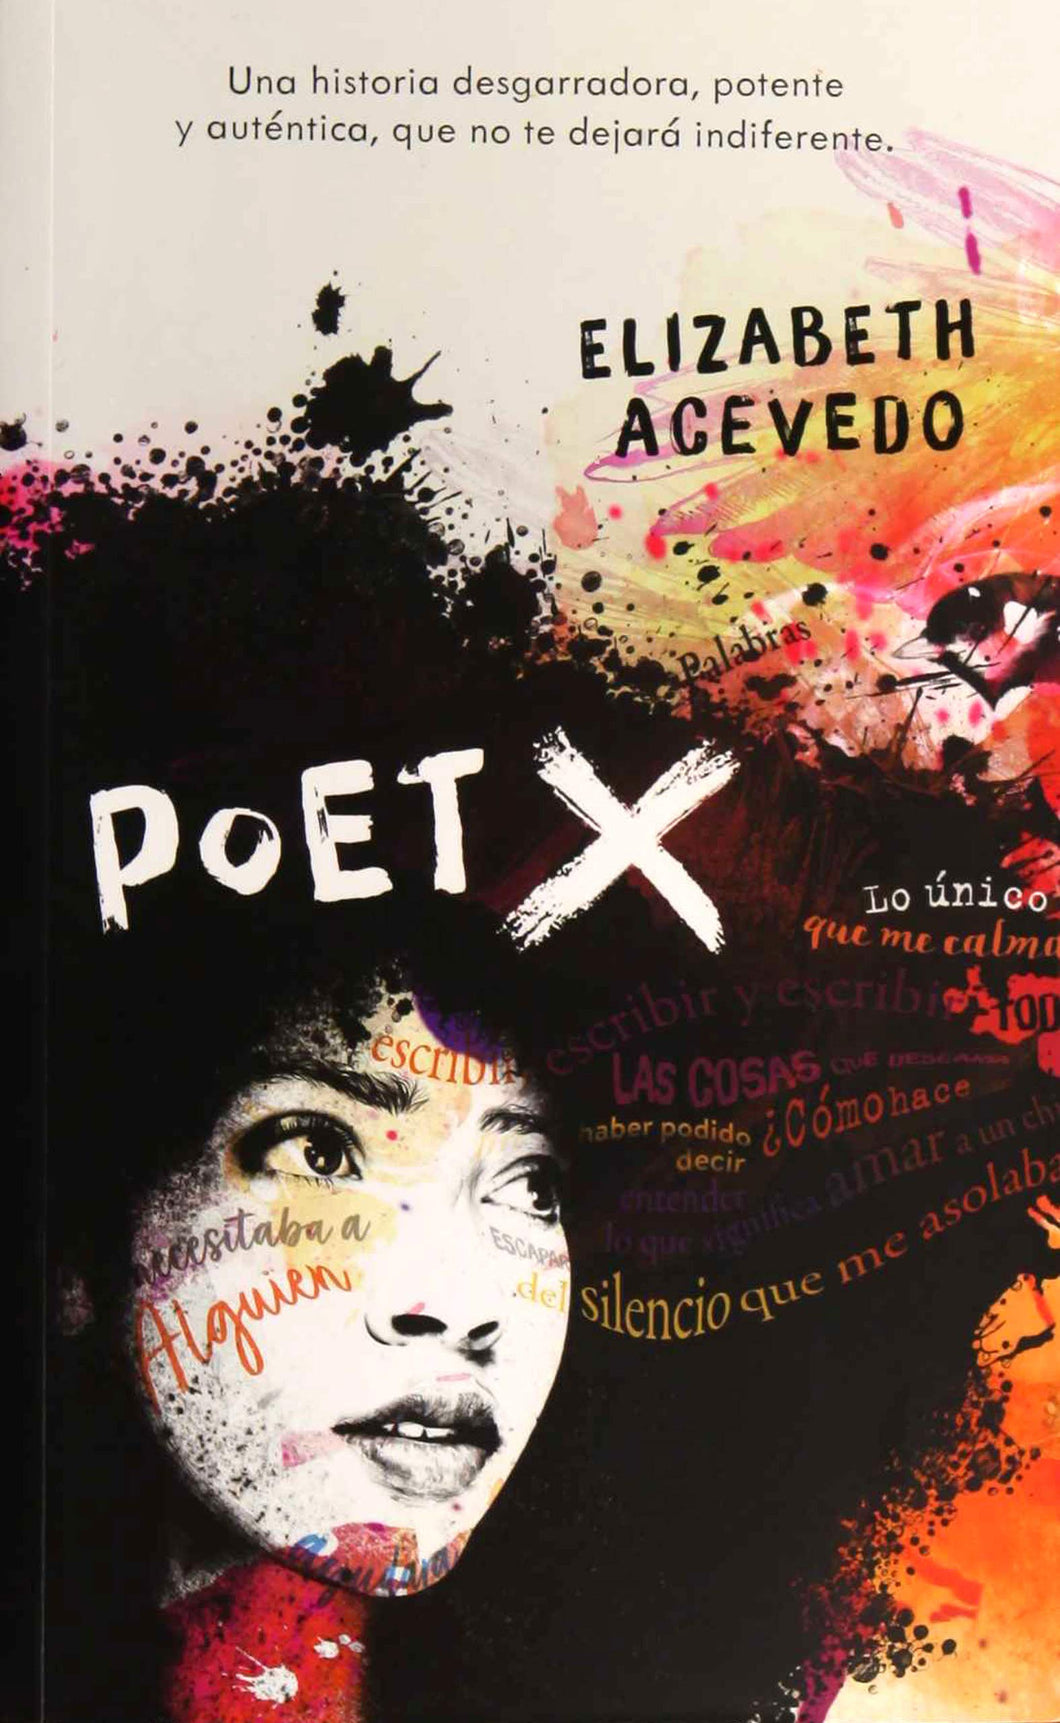 Poet X (Spanish Edition) by Elizabeth Acevedo